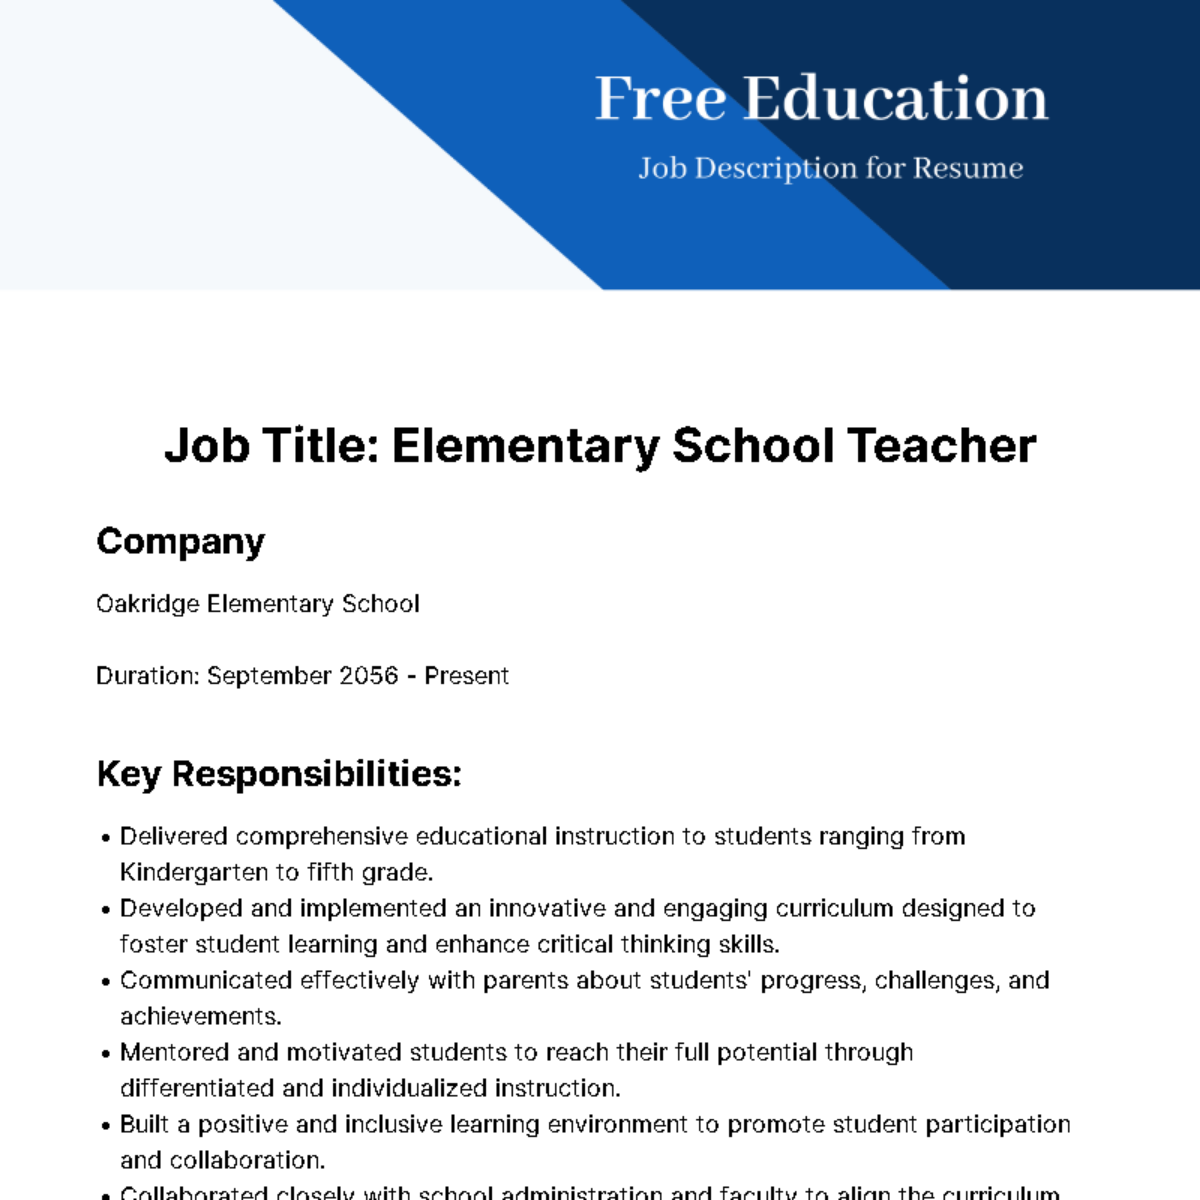 Education Job Description for Resume Template